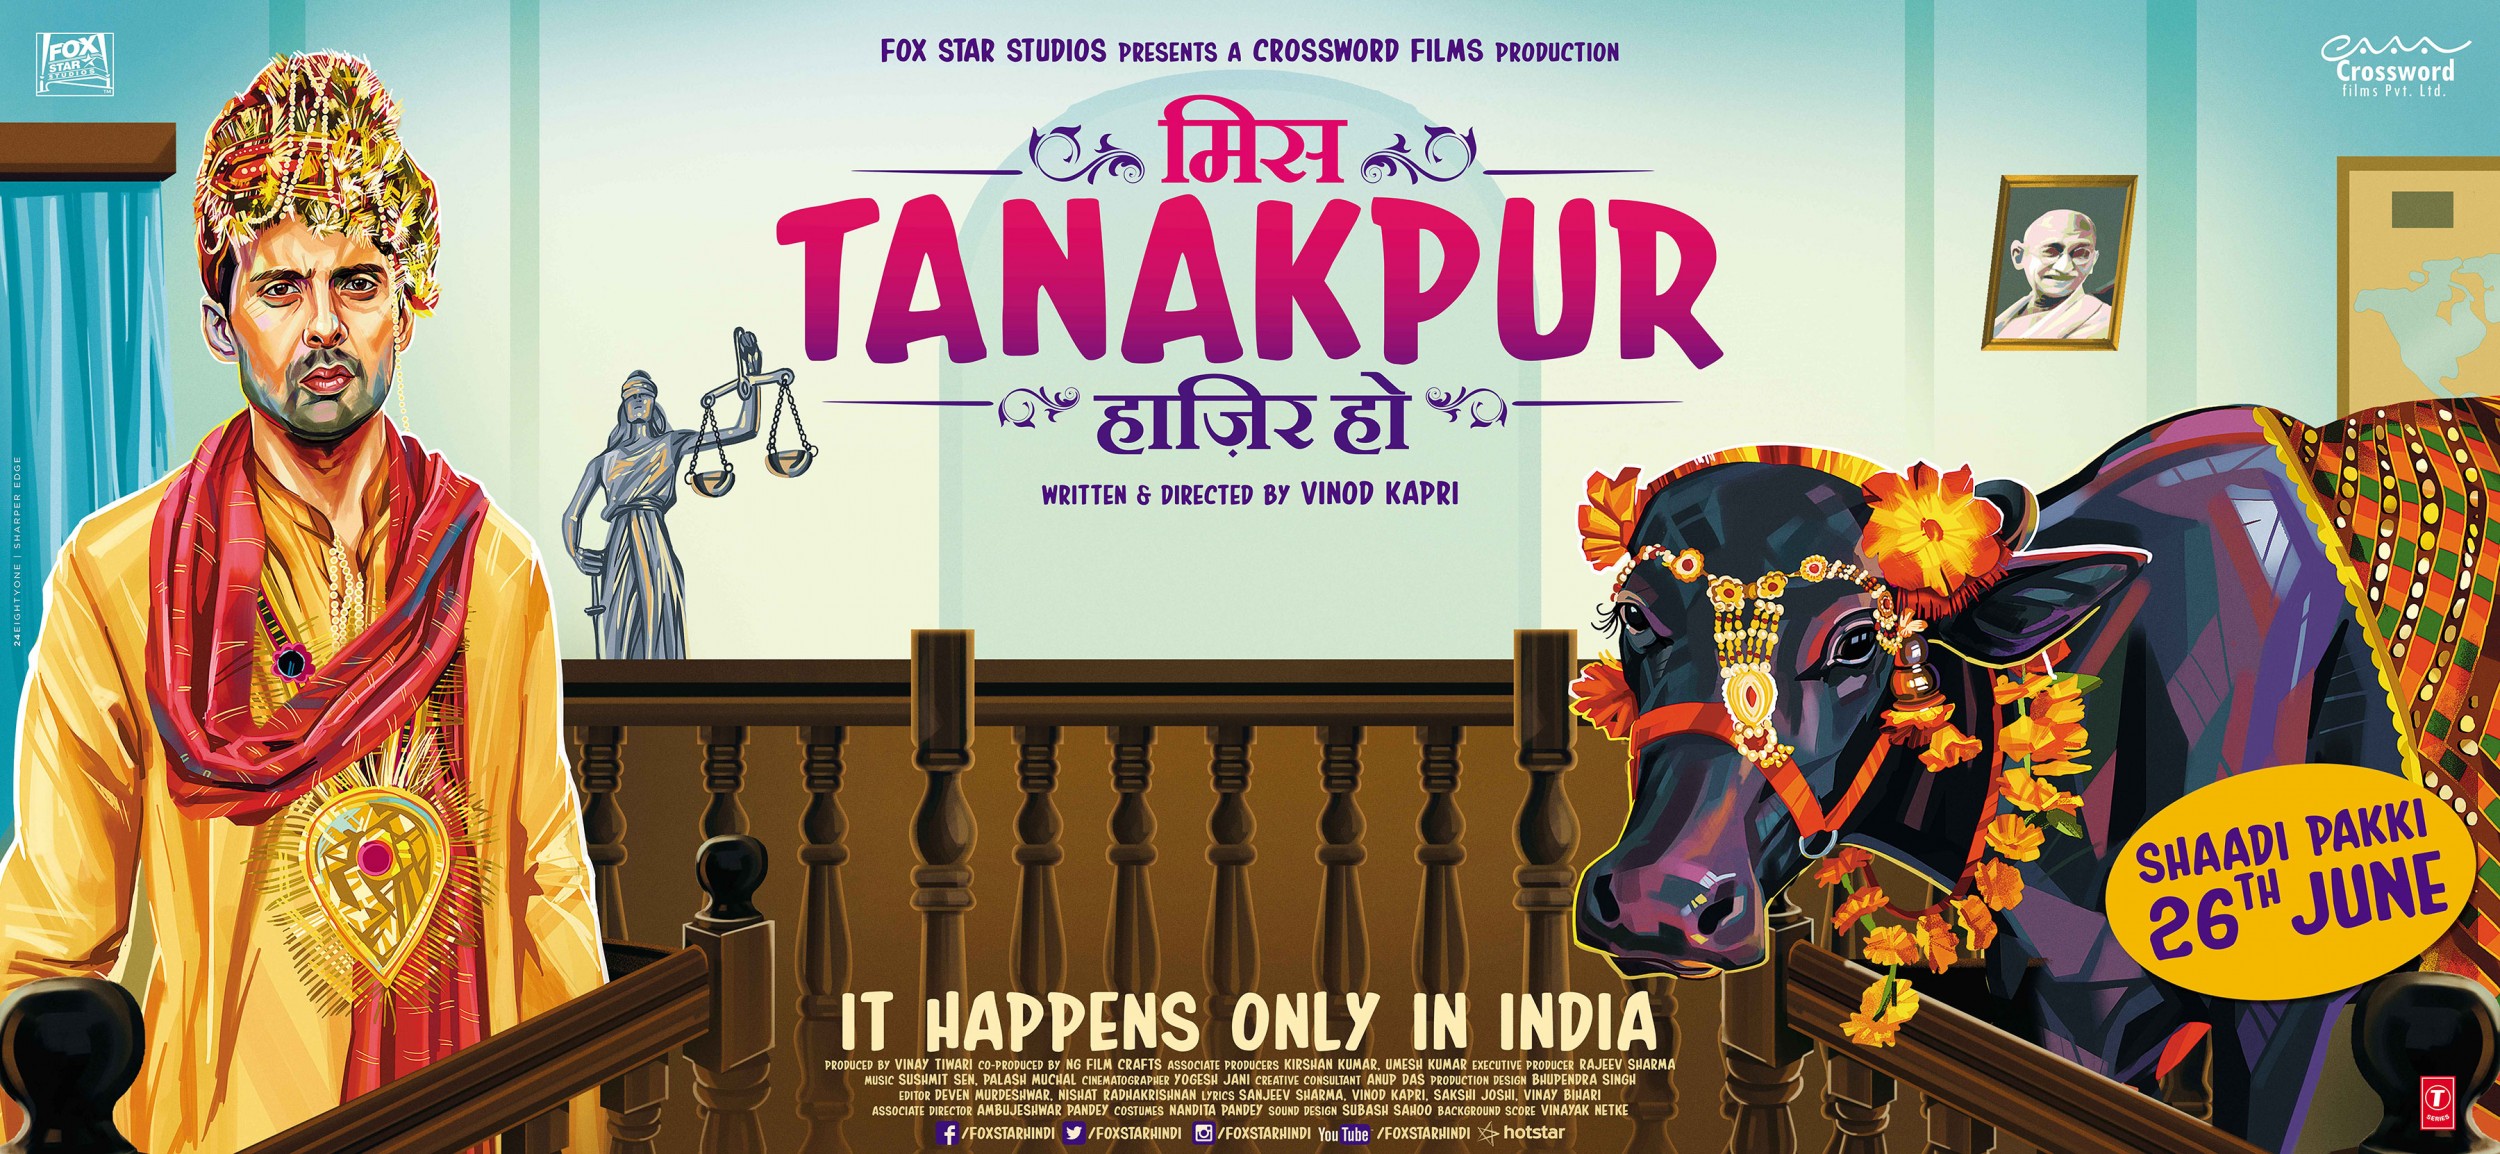 Mega Sized Movie Poster Image for Miss Tanakpur Hazir Ho (#3 of 3)